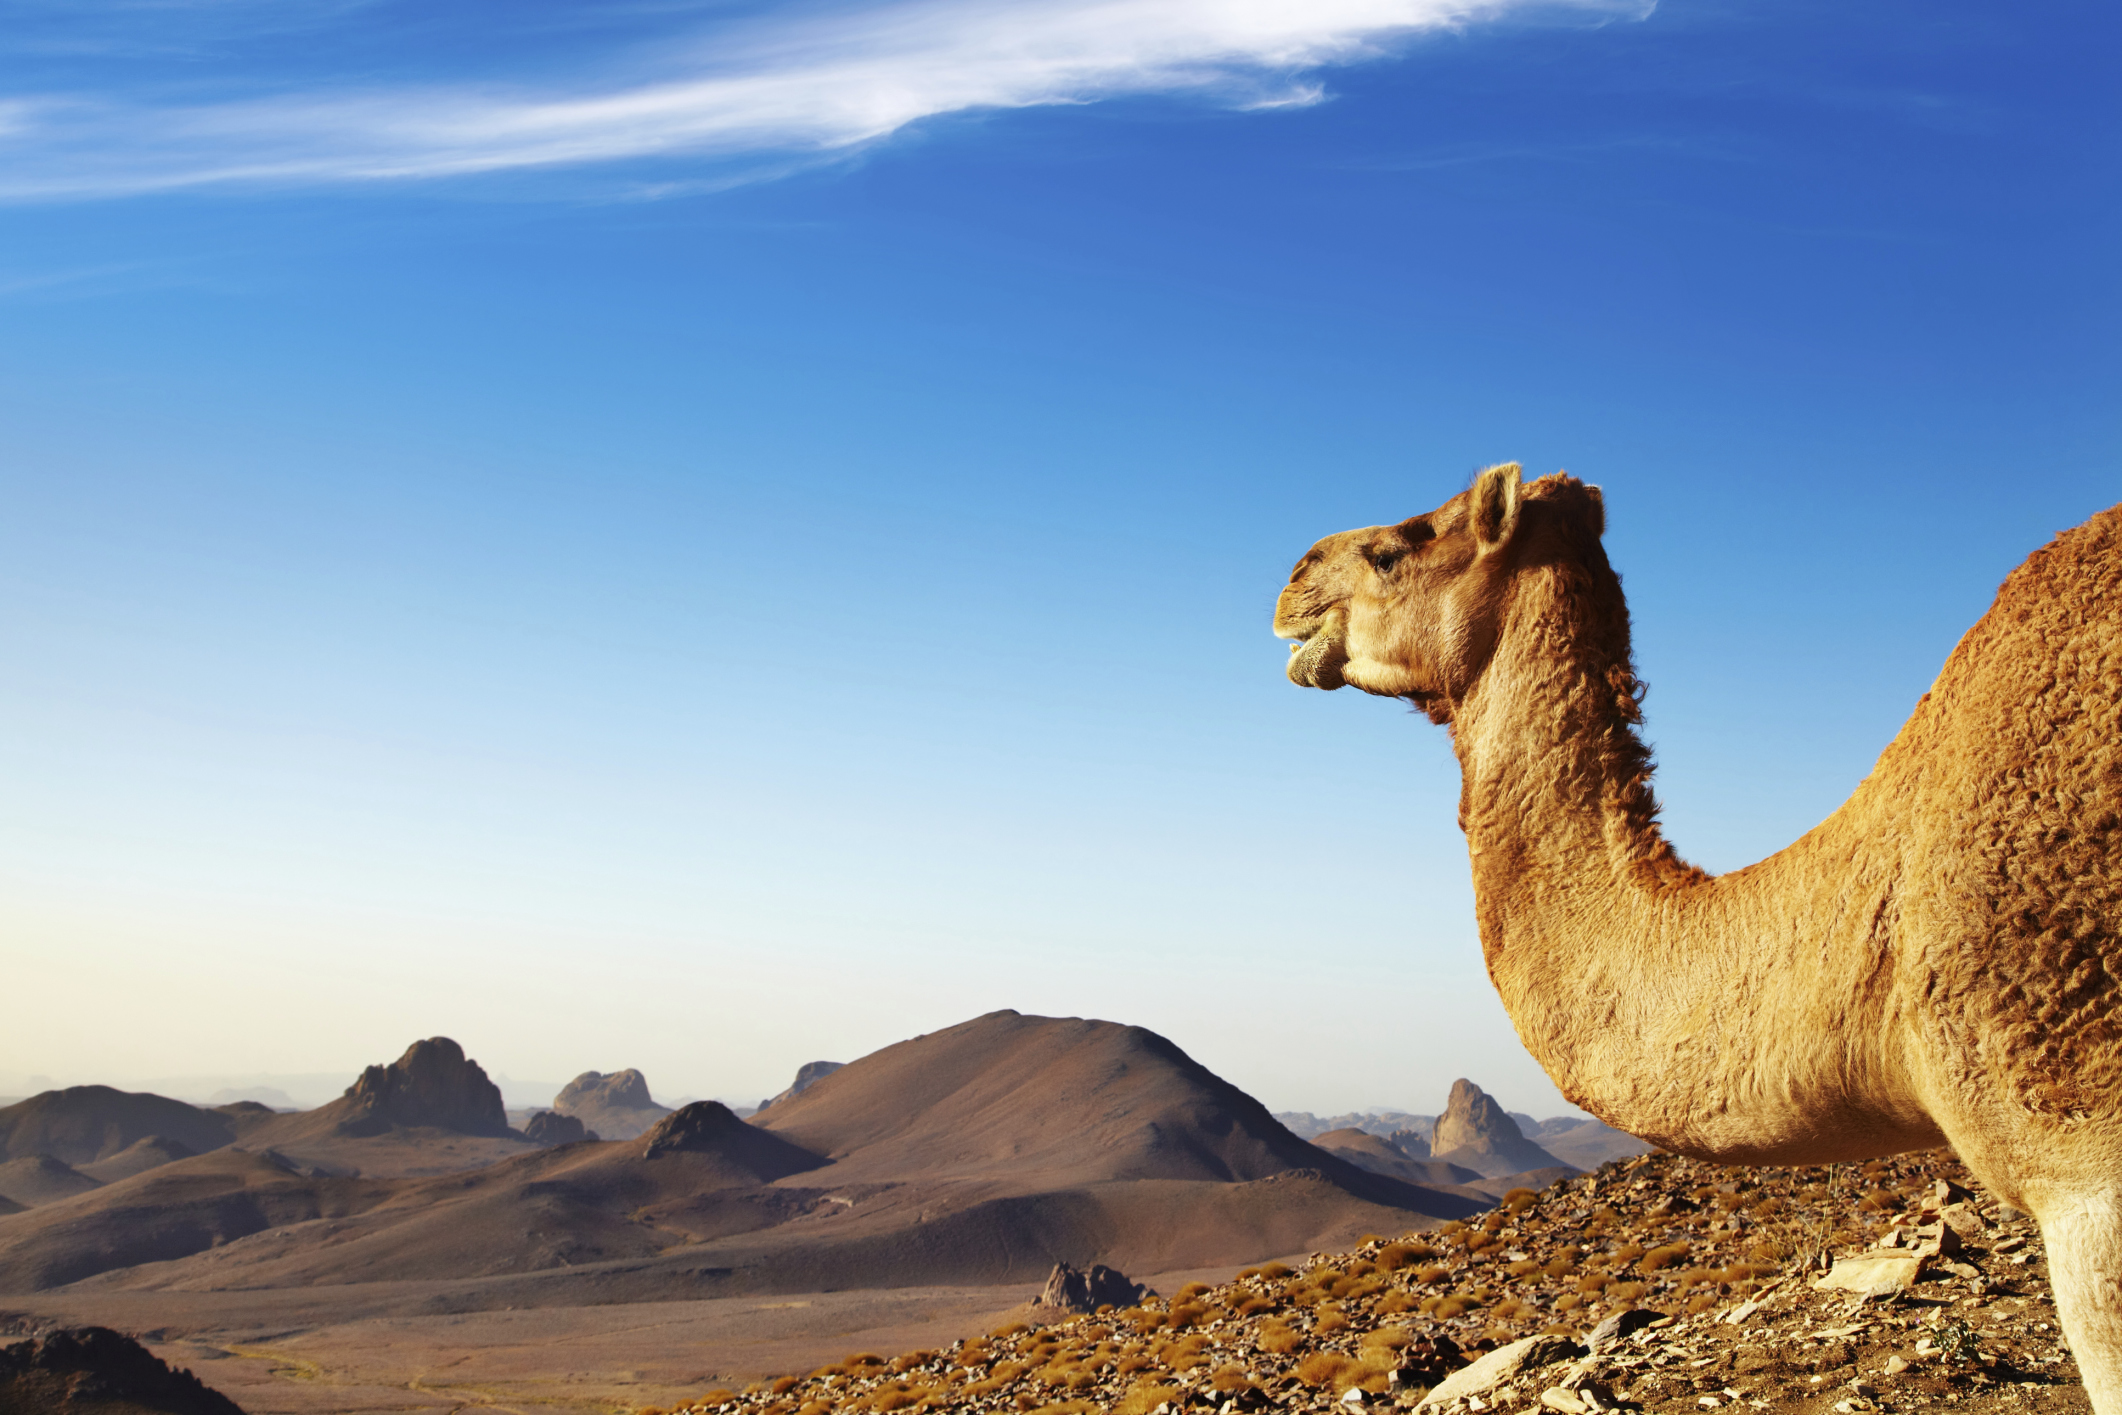 Algerian backgrop with Camel in the Sahara Desert